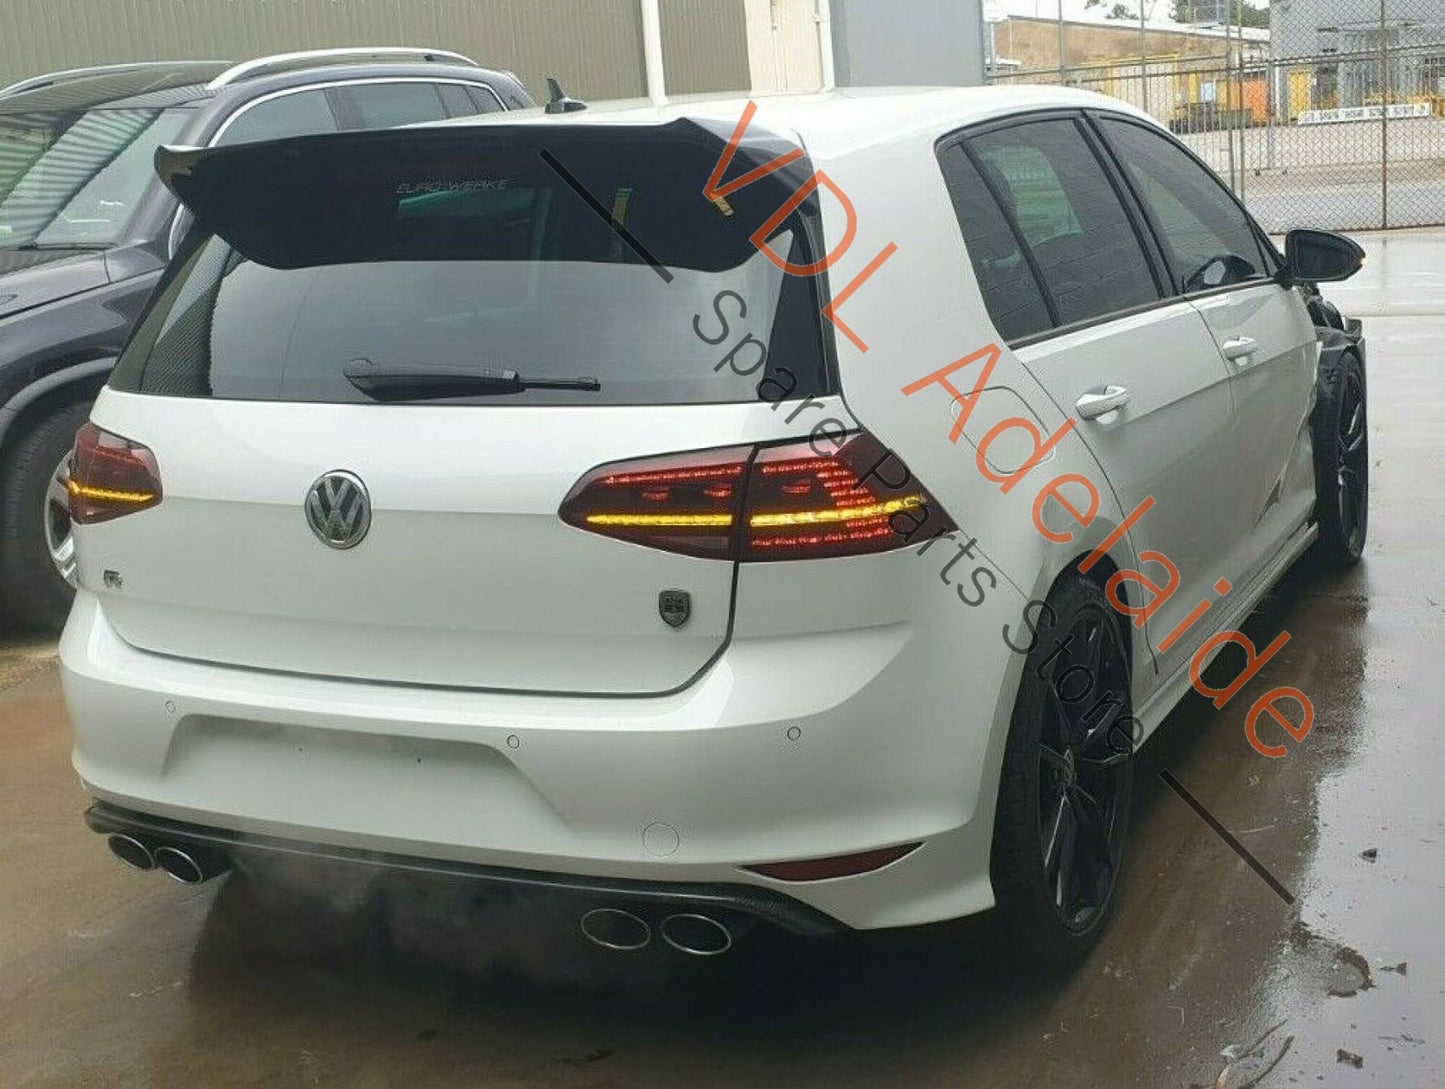 VW Golf R MK7 Rear Bumper Cover for Towing Eye Hook 5G6807441 L0K1 0R0R 5G6807441